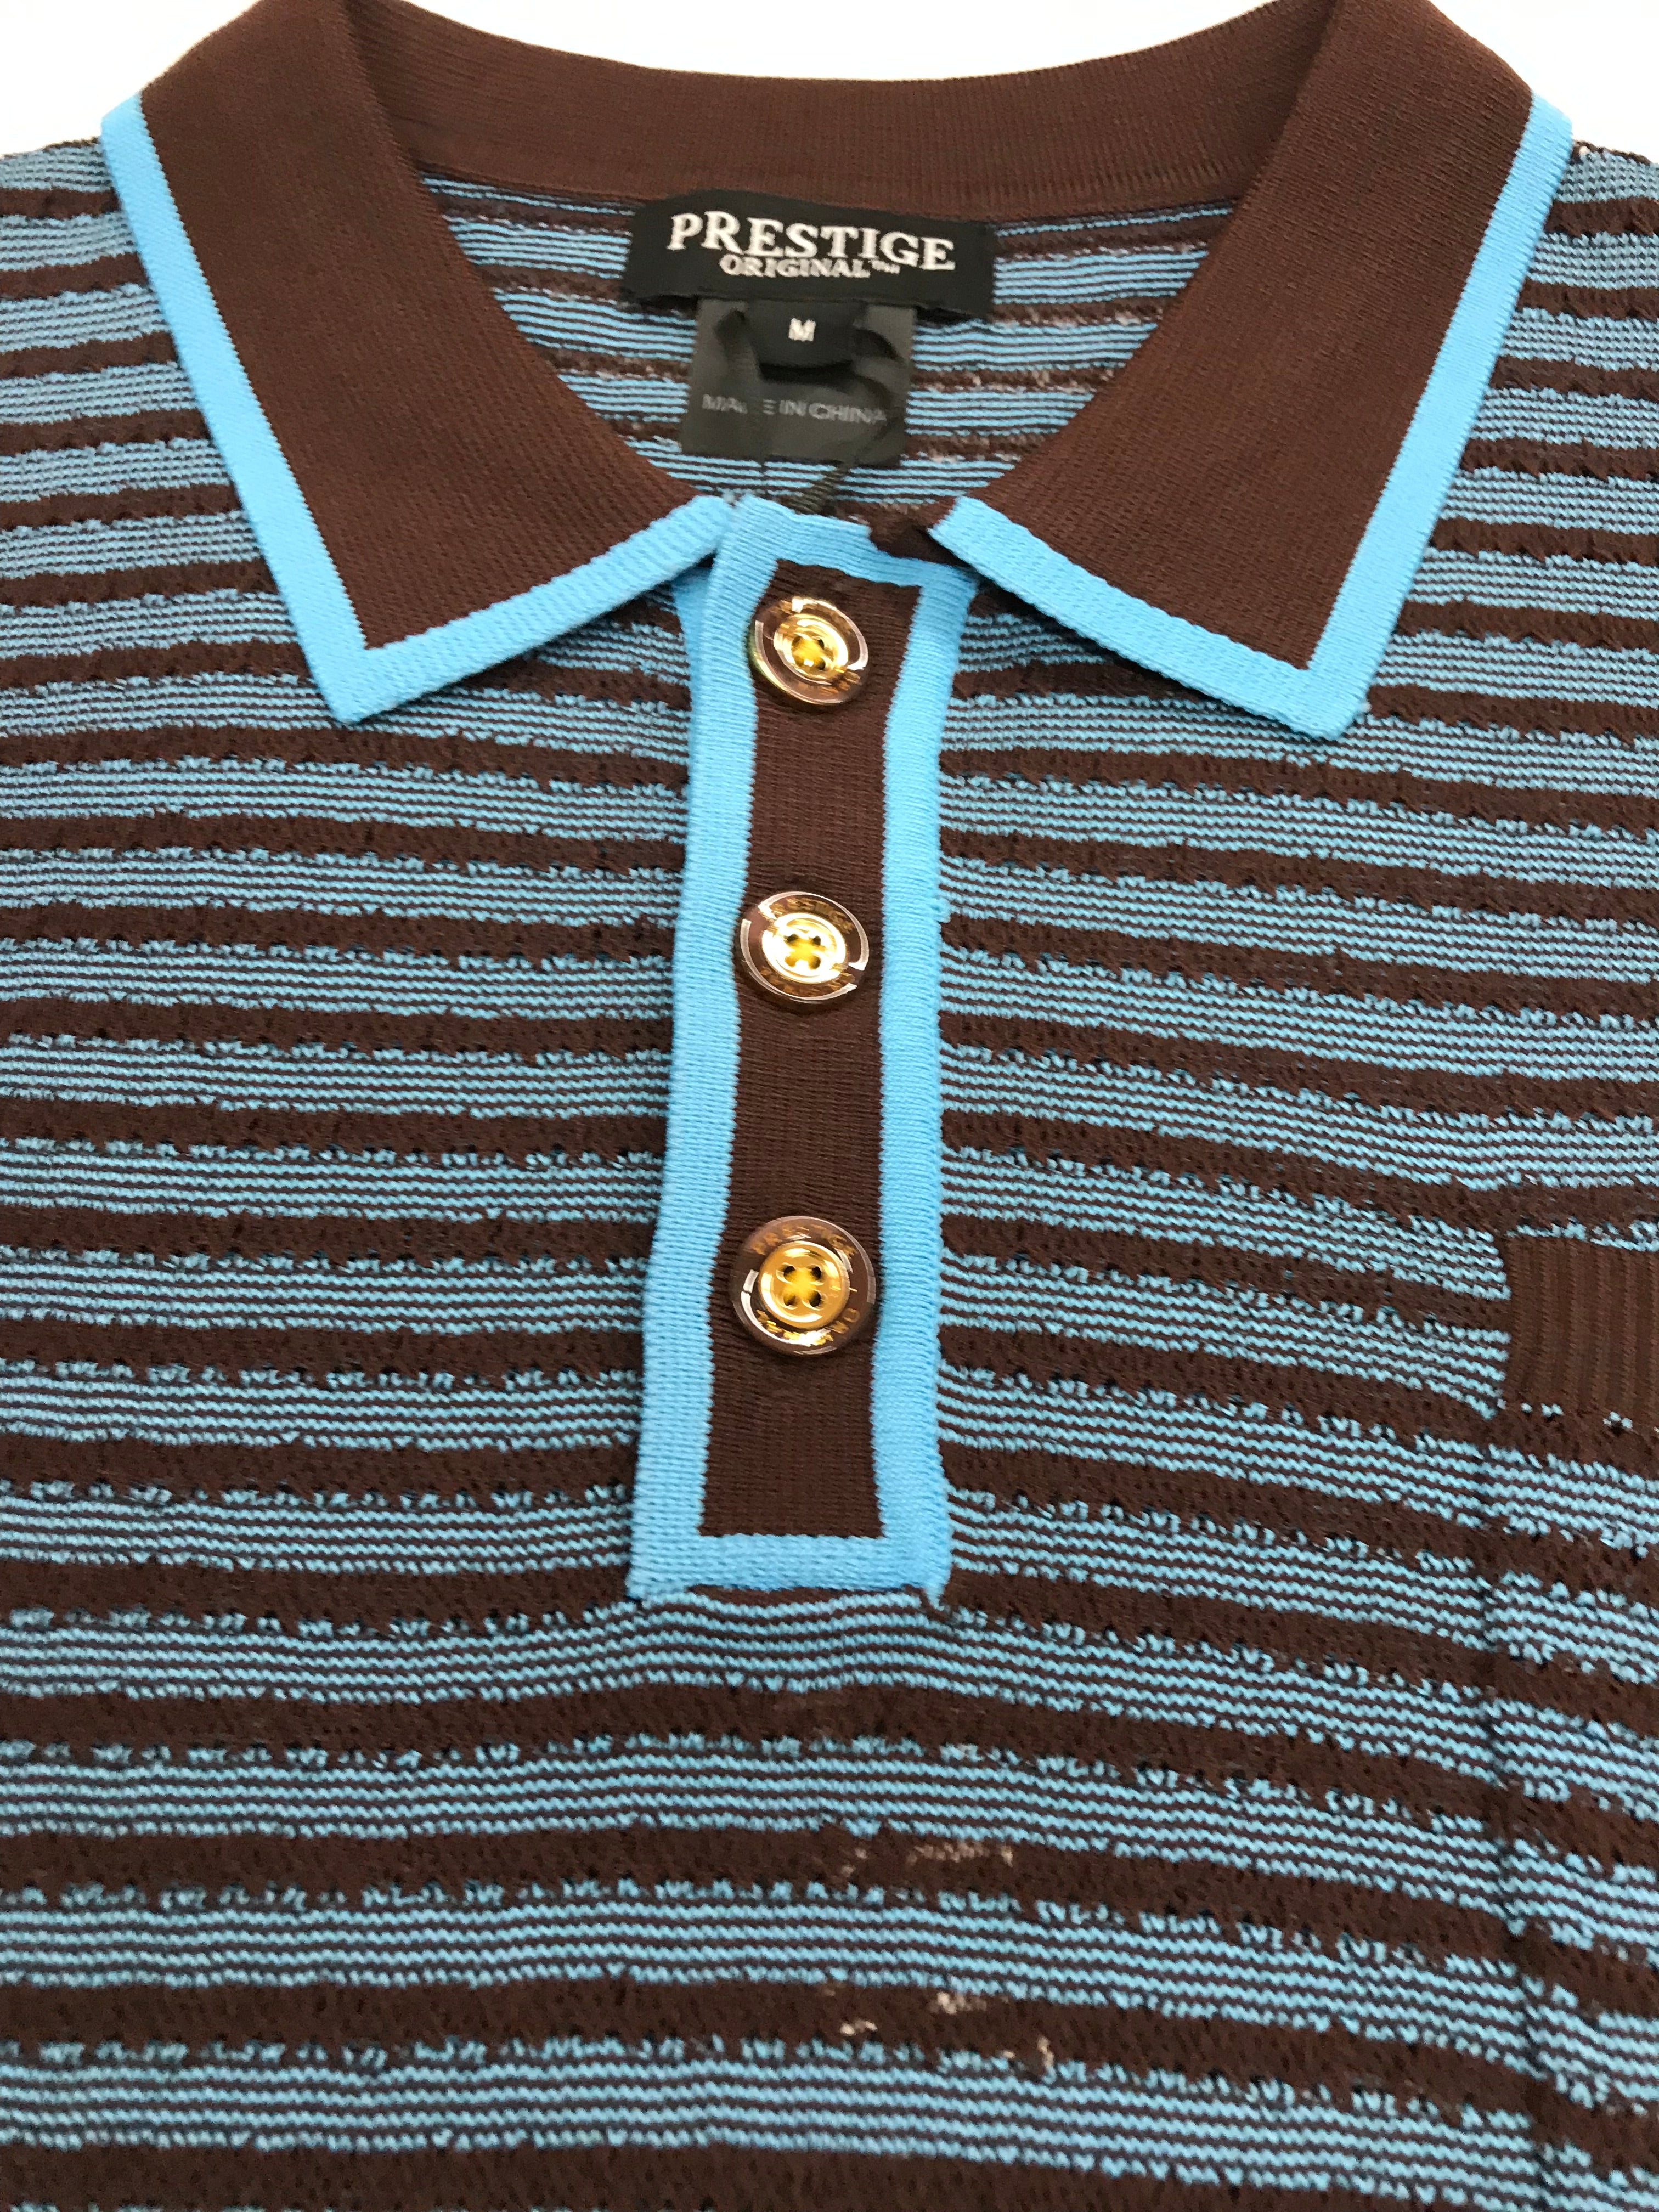 Prestige Teal/Brown Short Sleeve Shirt